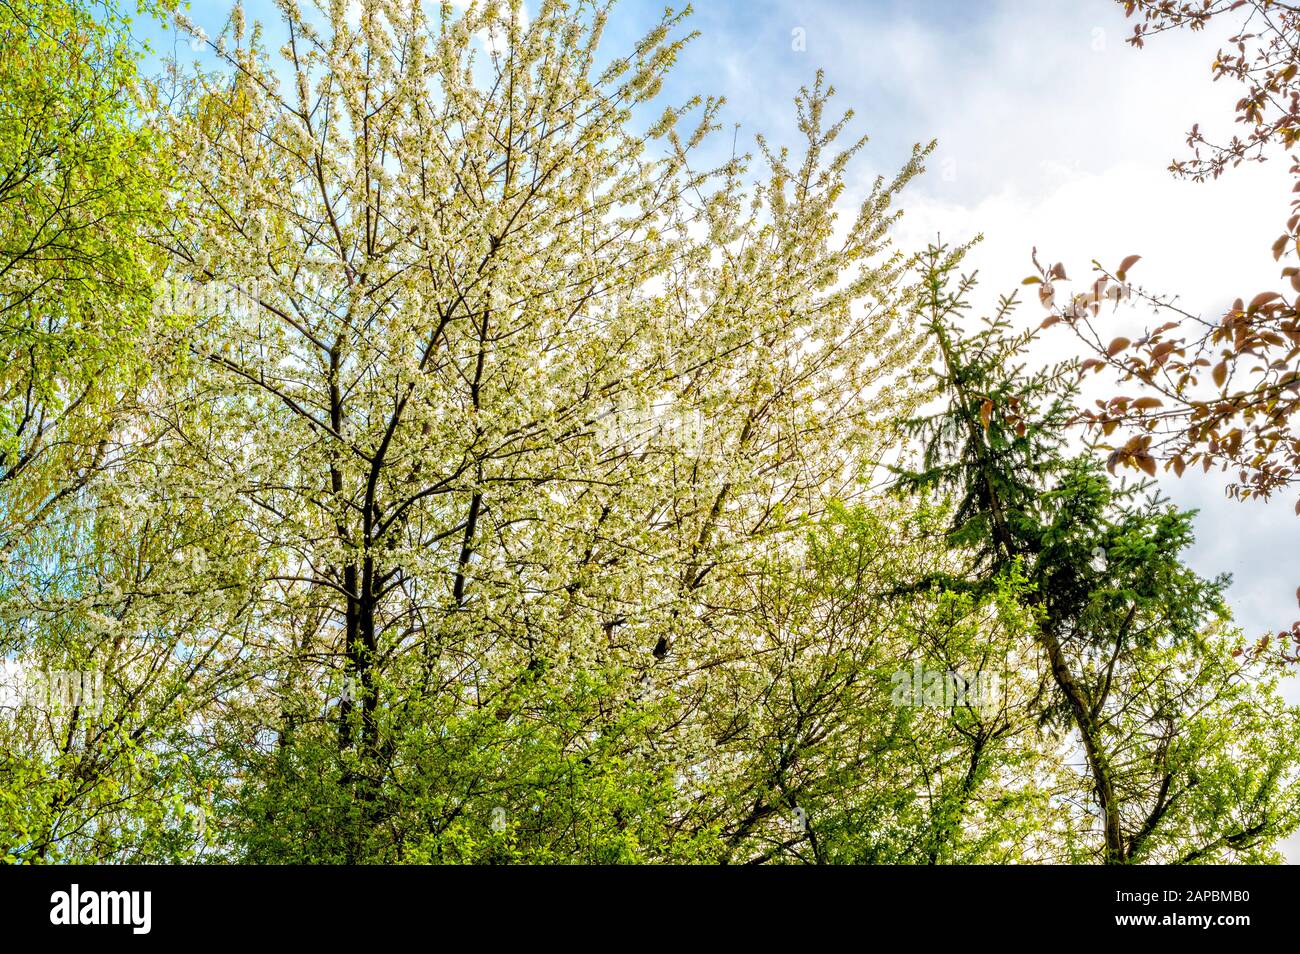 Árboles en flor en primavera; blühende Obstbäume im Frühling Foto de stock